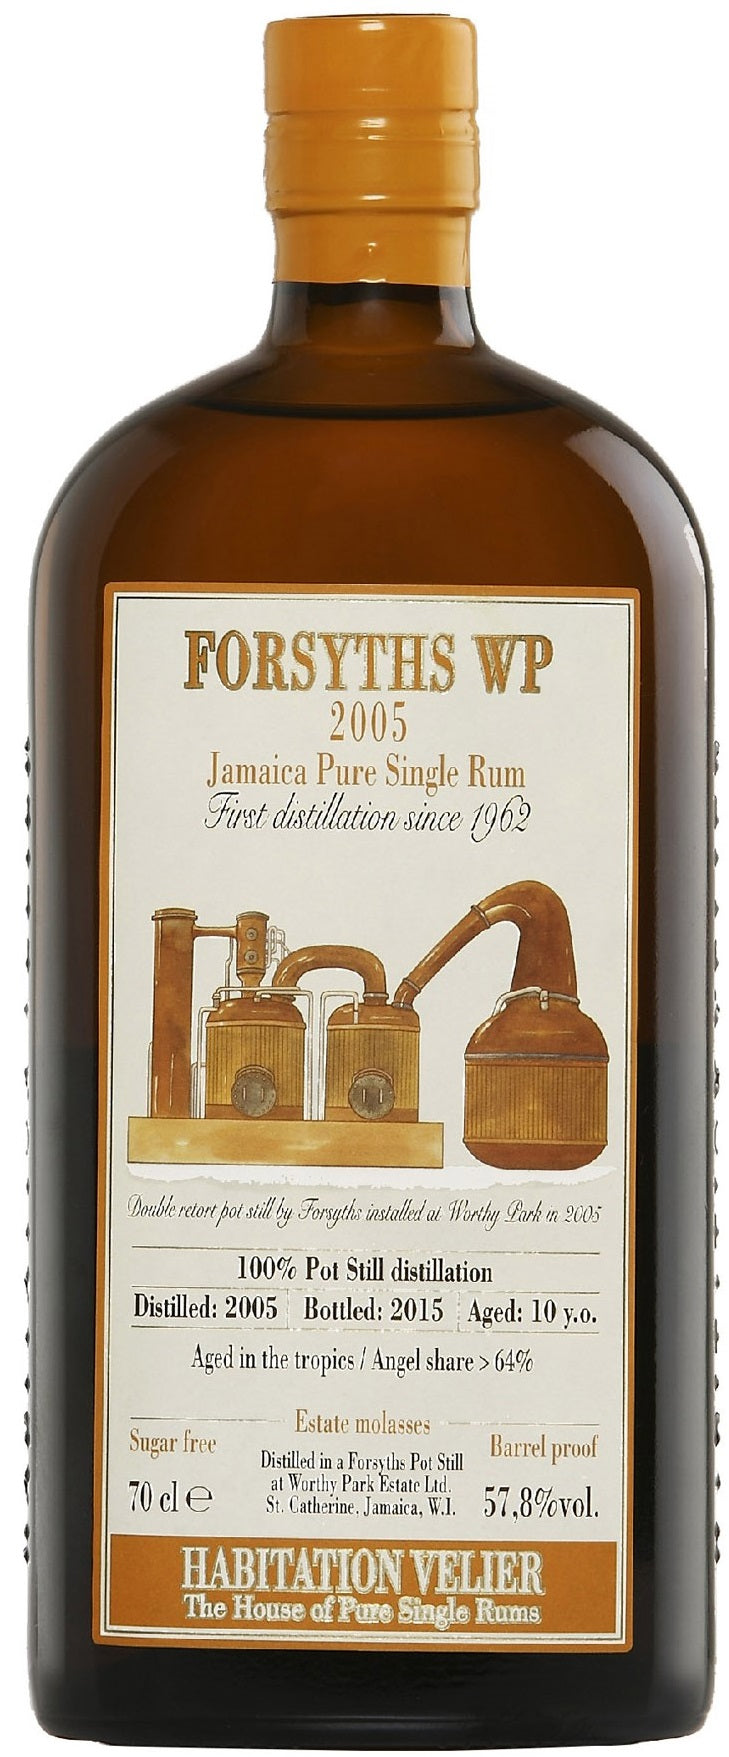 Habitation Velier Forsyths WP Pure Single Rum Jamaica 2005